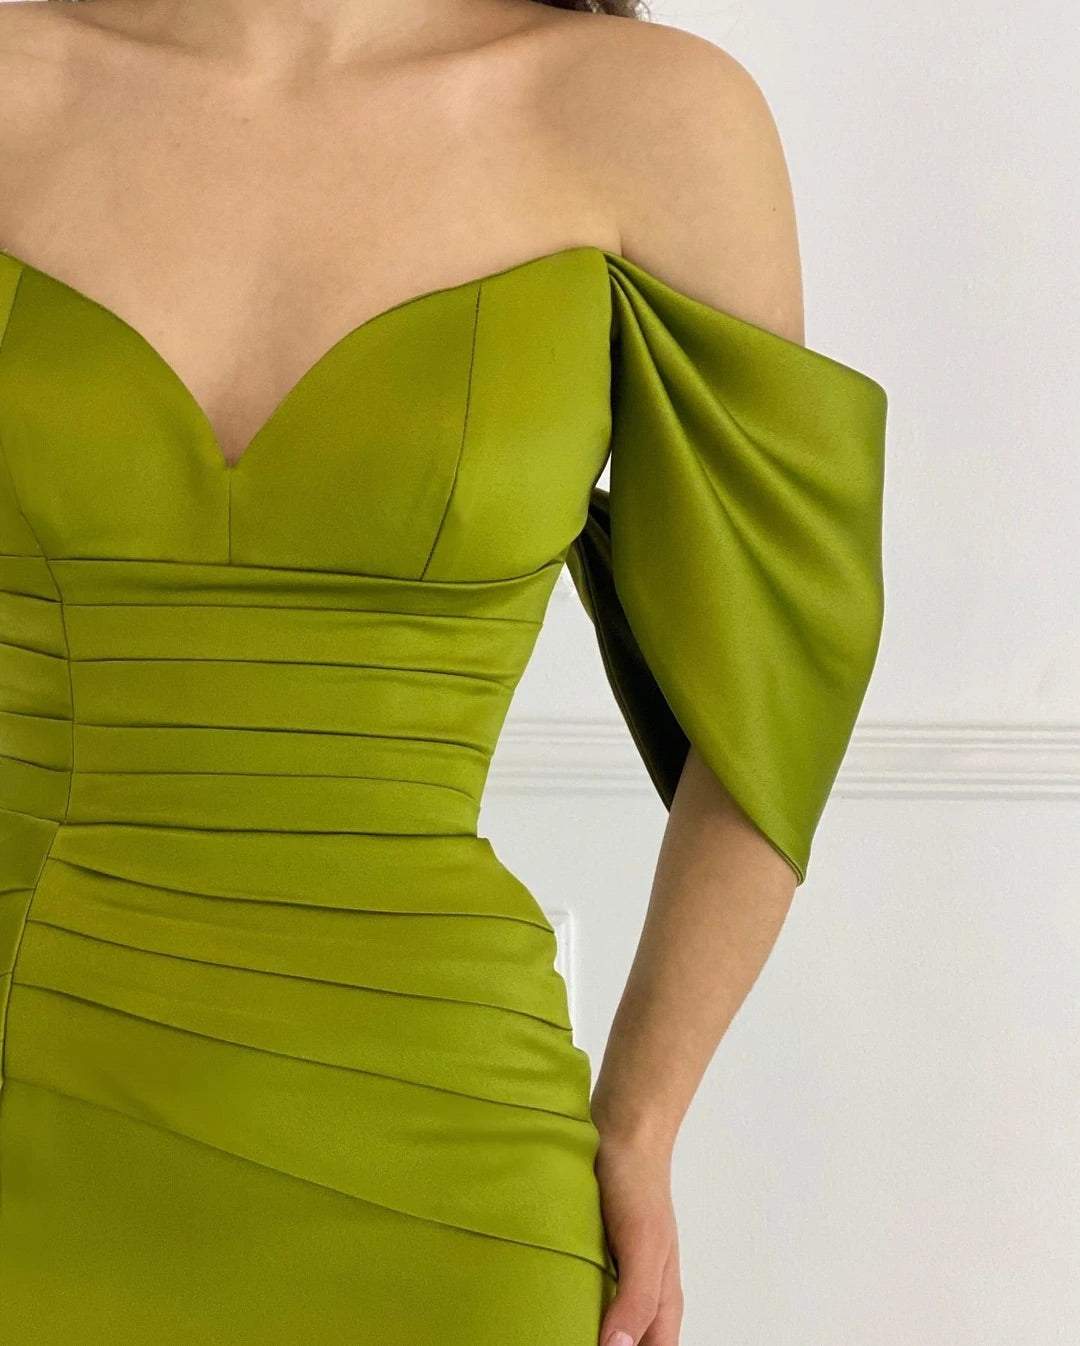 Pear Green Evening Dress-danddclothing-Classic Elegant Gowns,Evening Dresses,Long